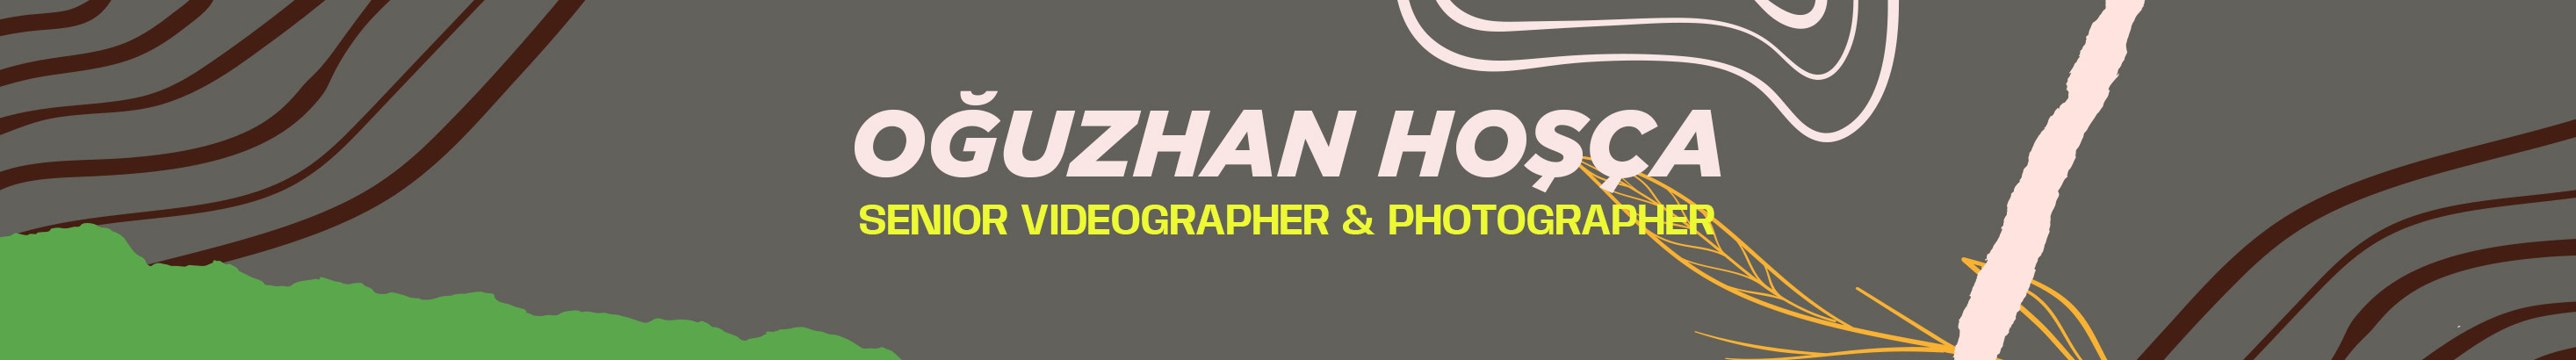 Oğuzhan Hoşça's profile banner